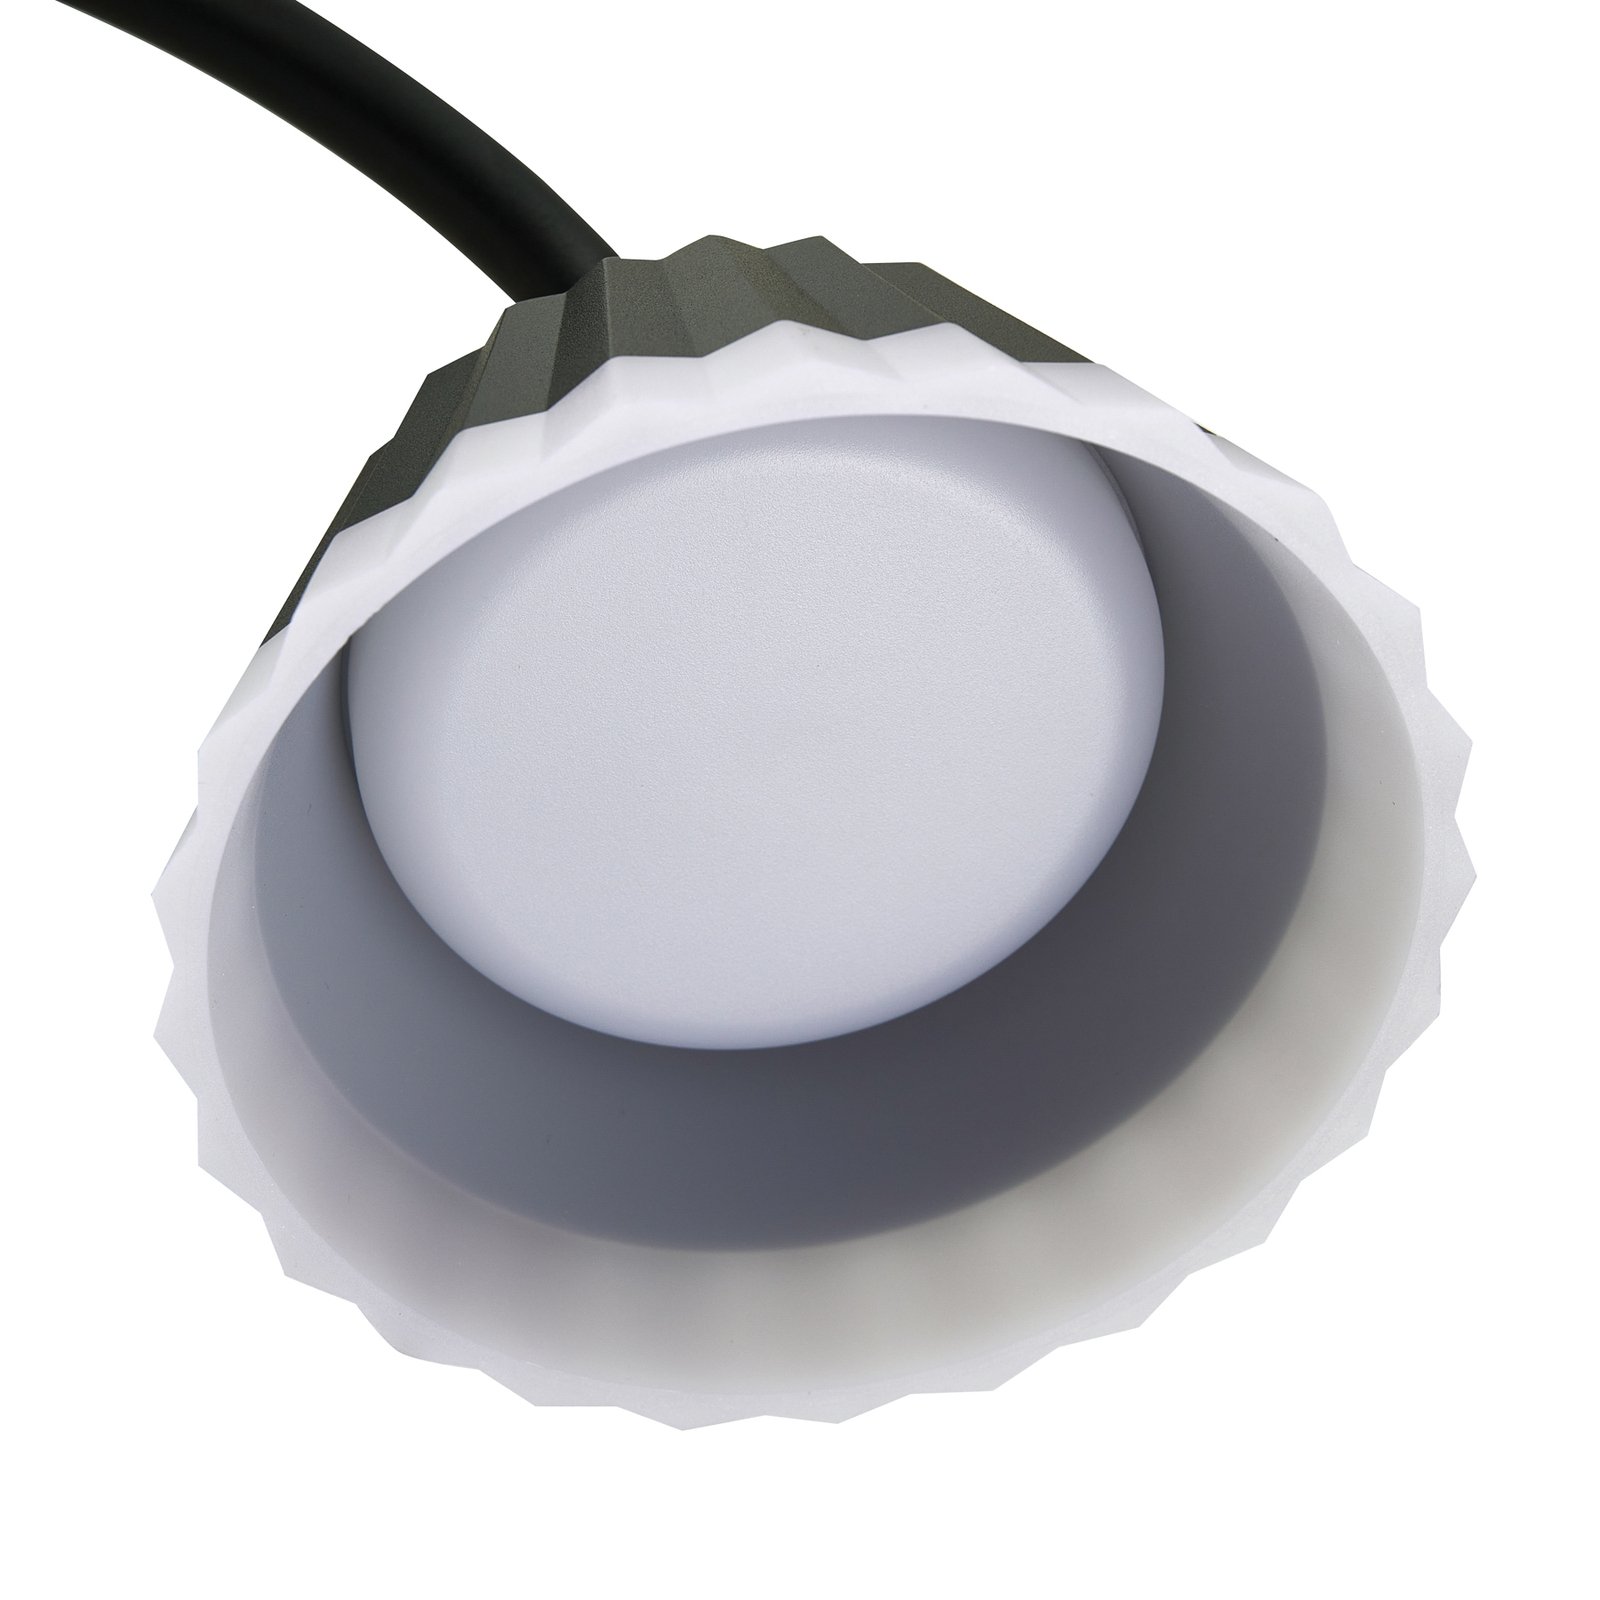 Lindby LED grondspies lamp Ameline, donkergrijs, IP65, 77 cm